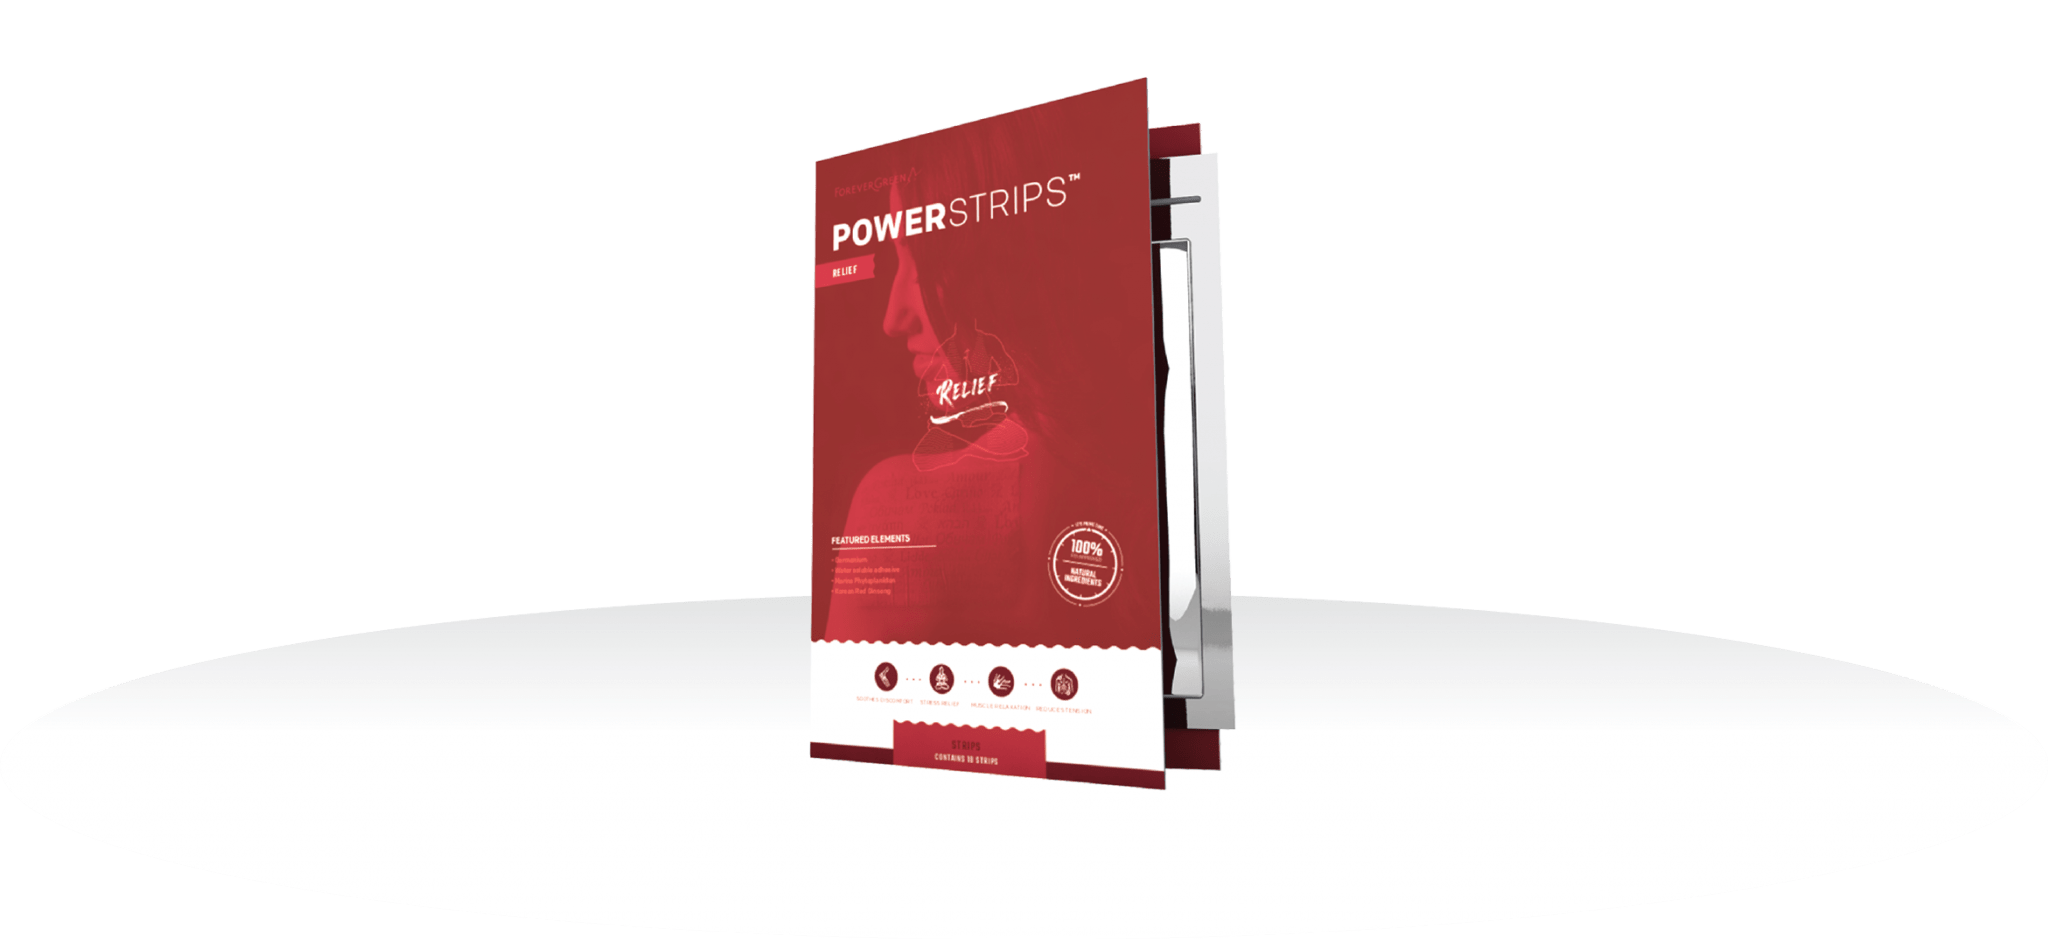 PowerStrips_Product-forevergreen